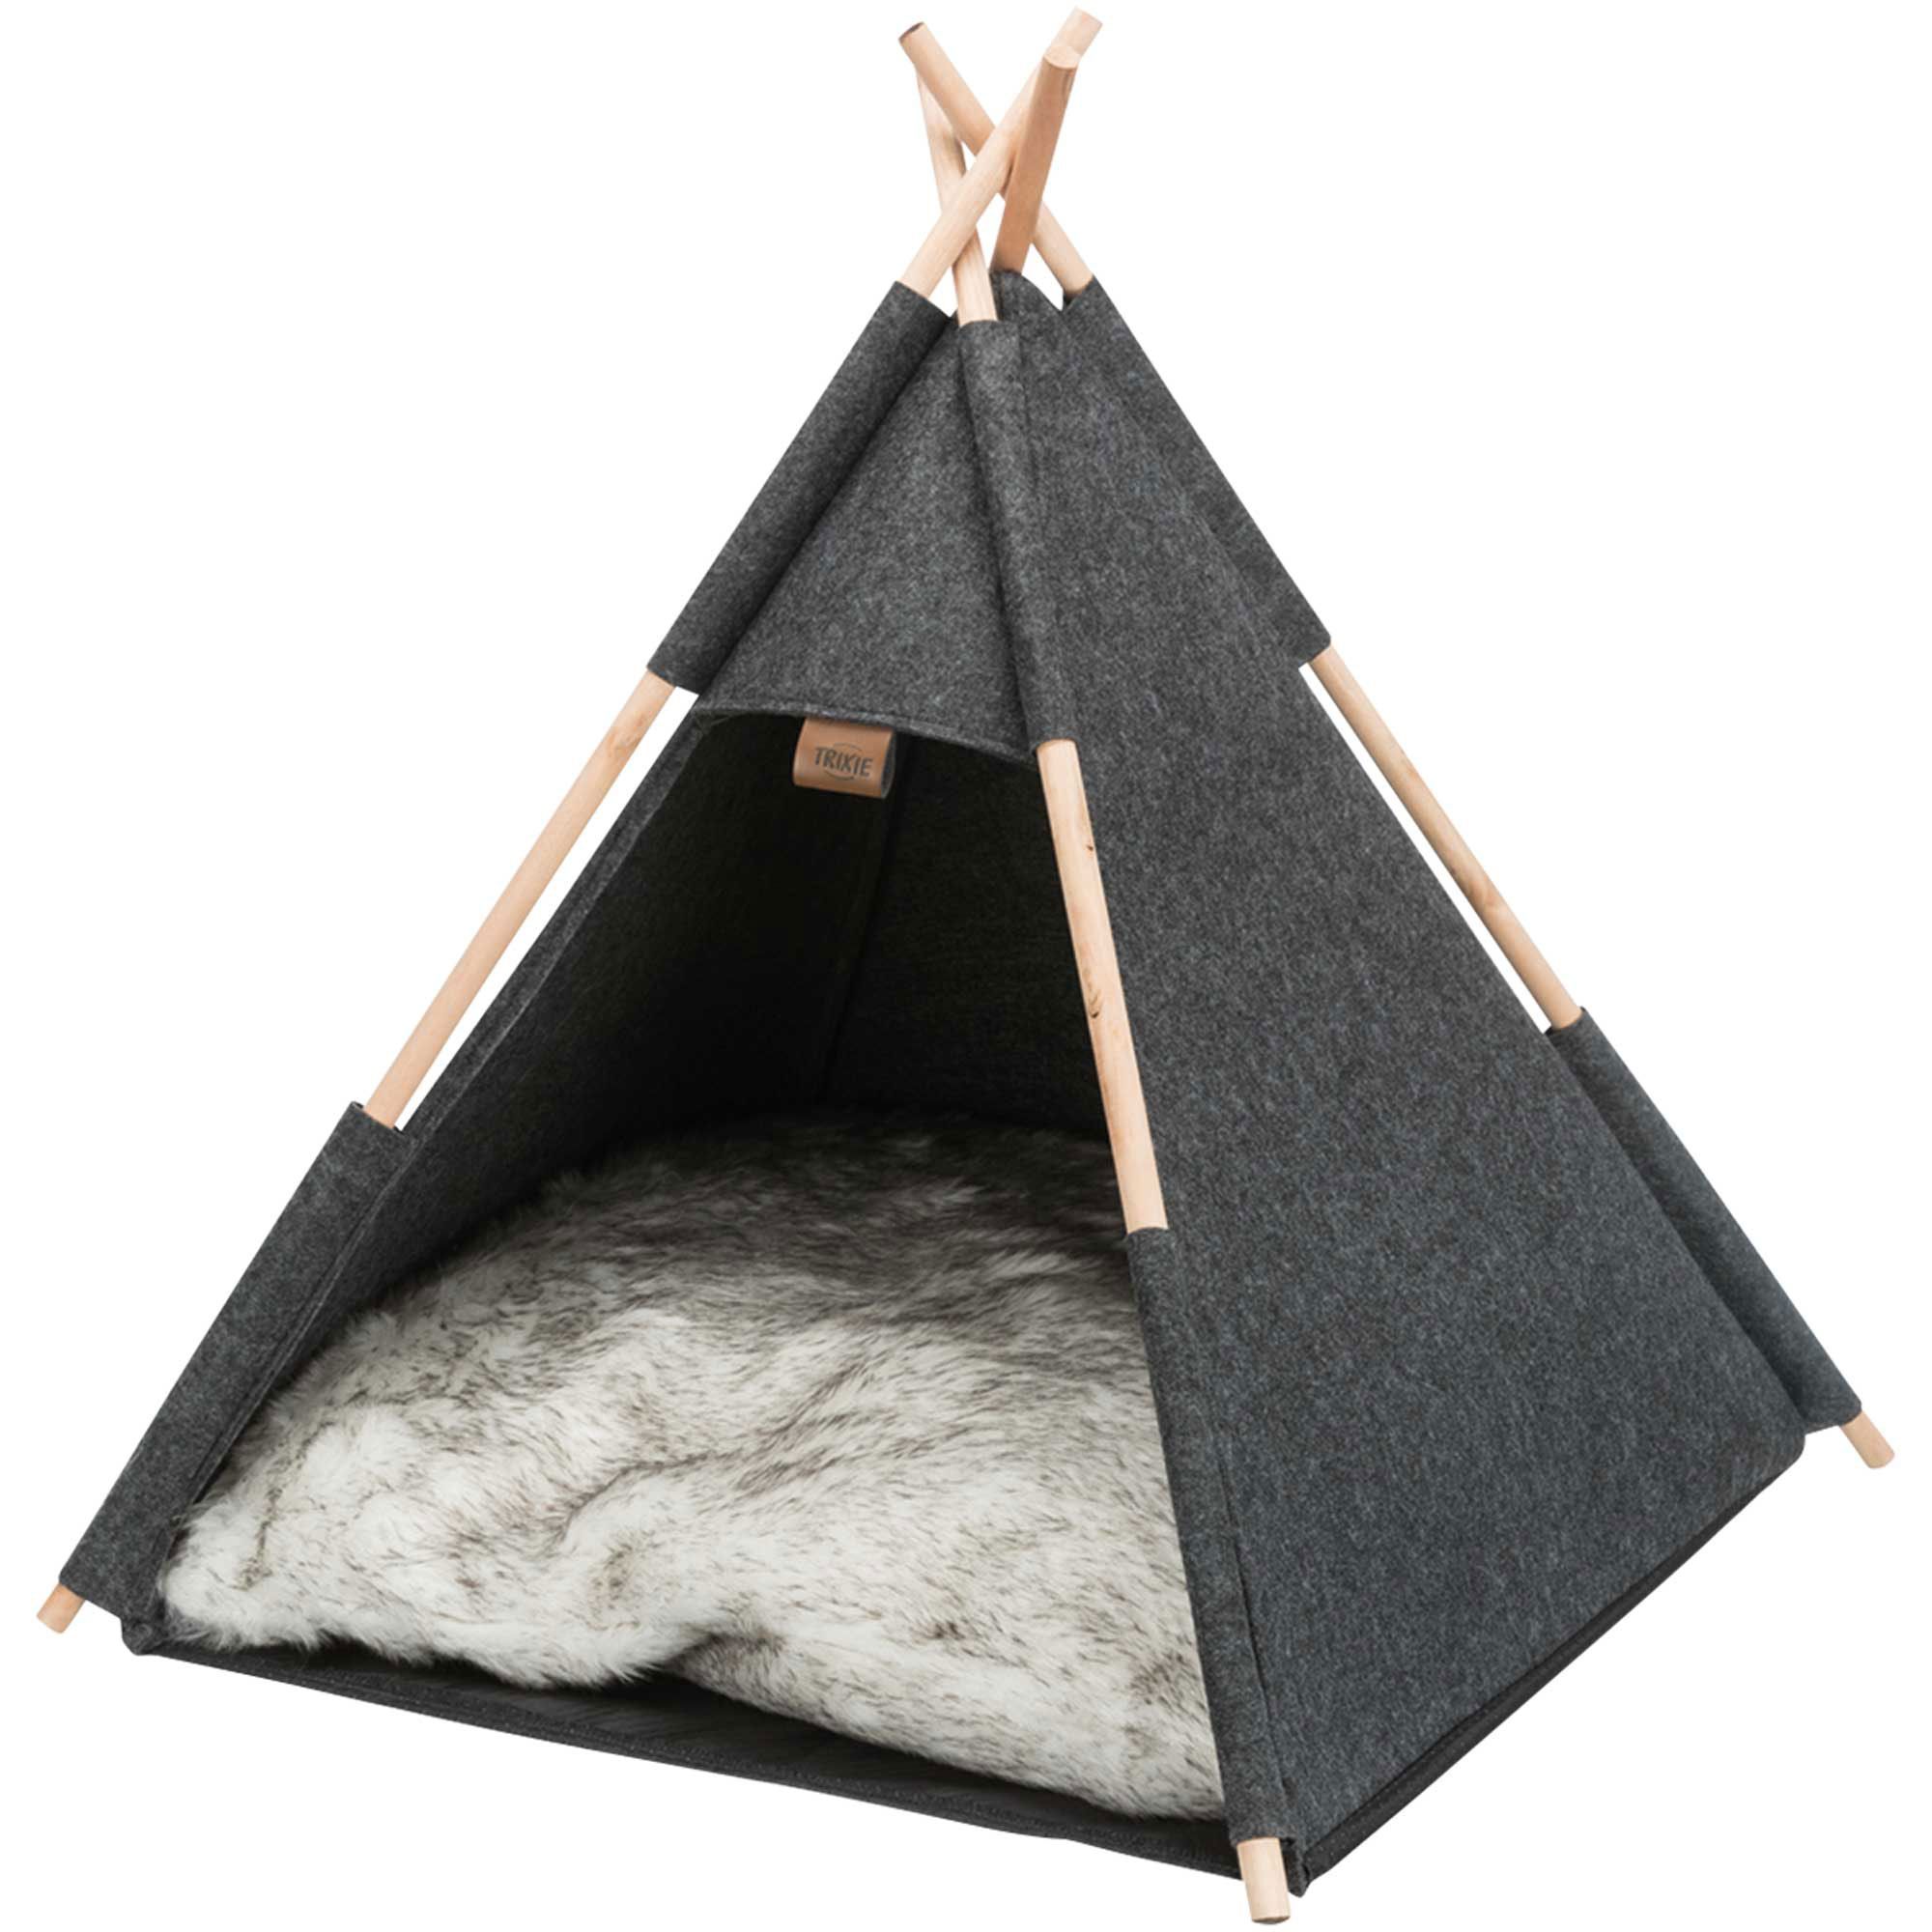 Hunde Zelt Tipi - Diese geräumige Hundehöhle ist die ideale Wohnungshütte für kleine Hunde